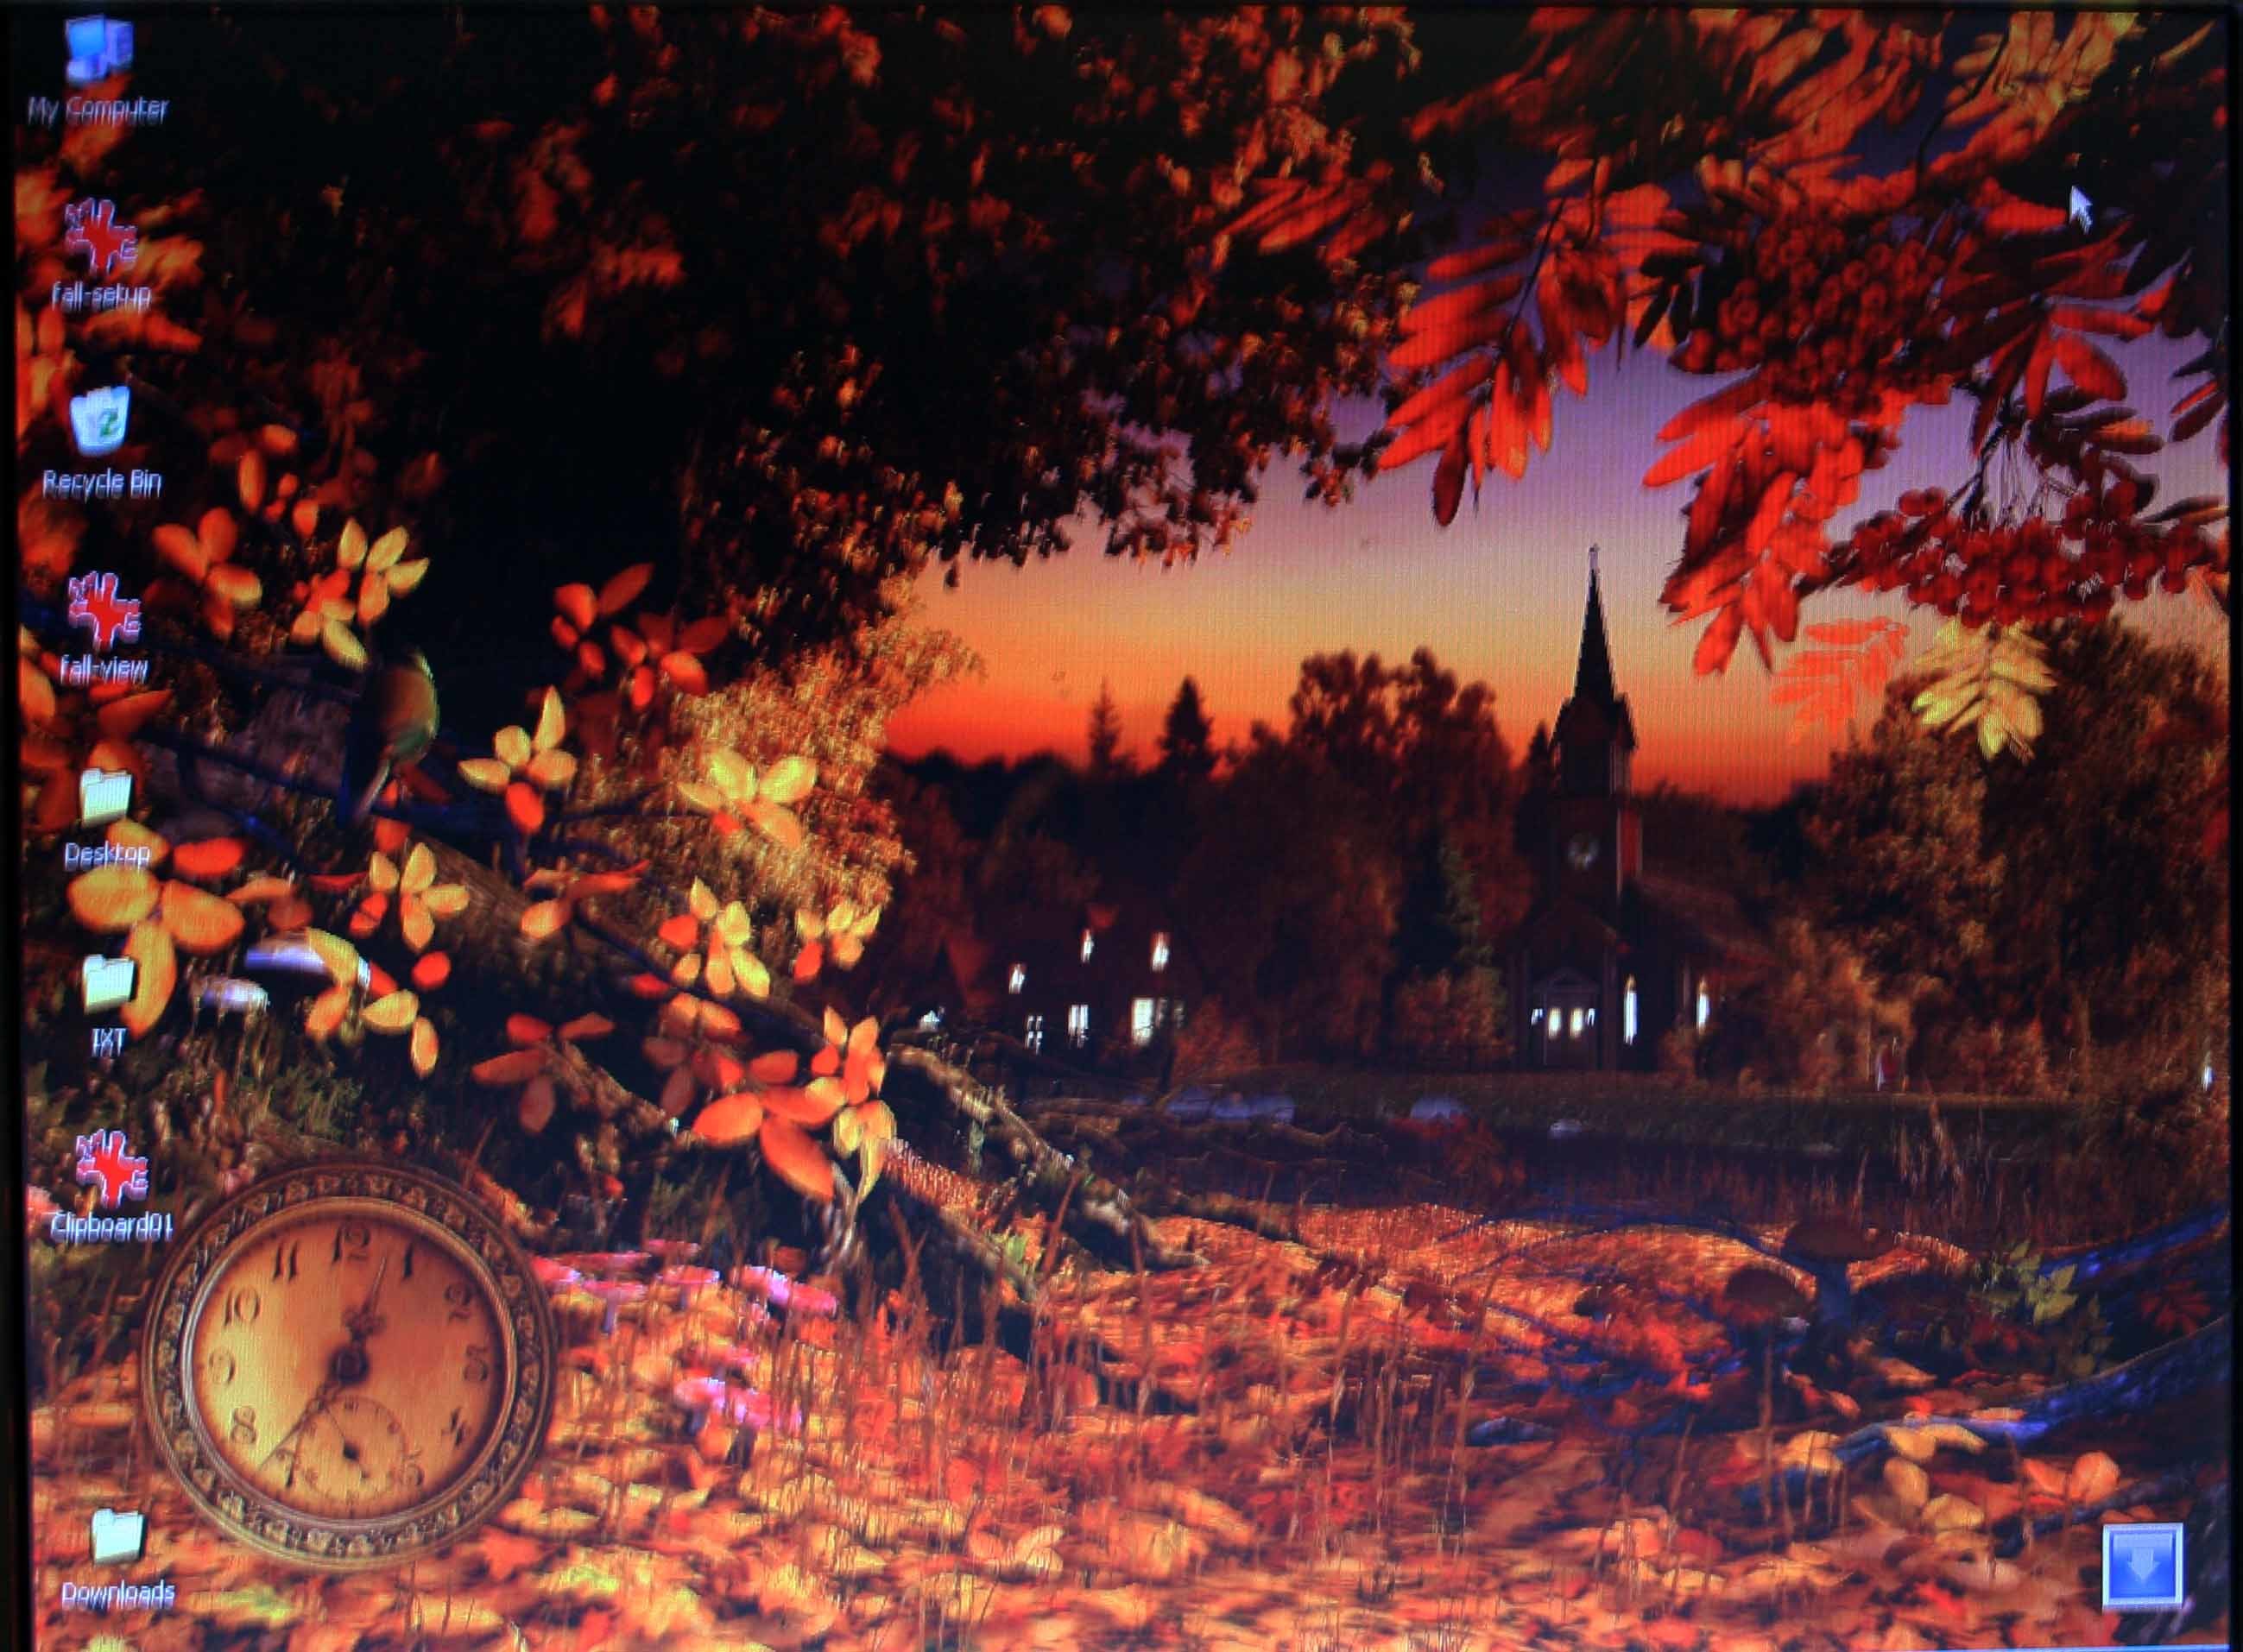 Autumn Wonderland 3D Screensaver and Animated Wallpaper screenshots